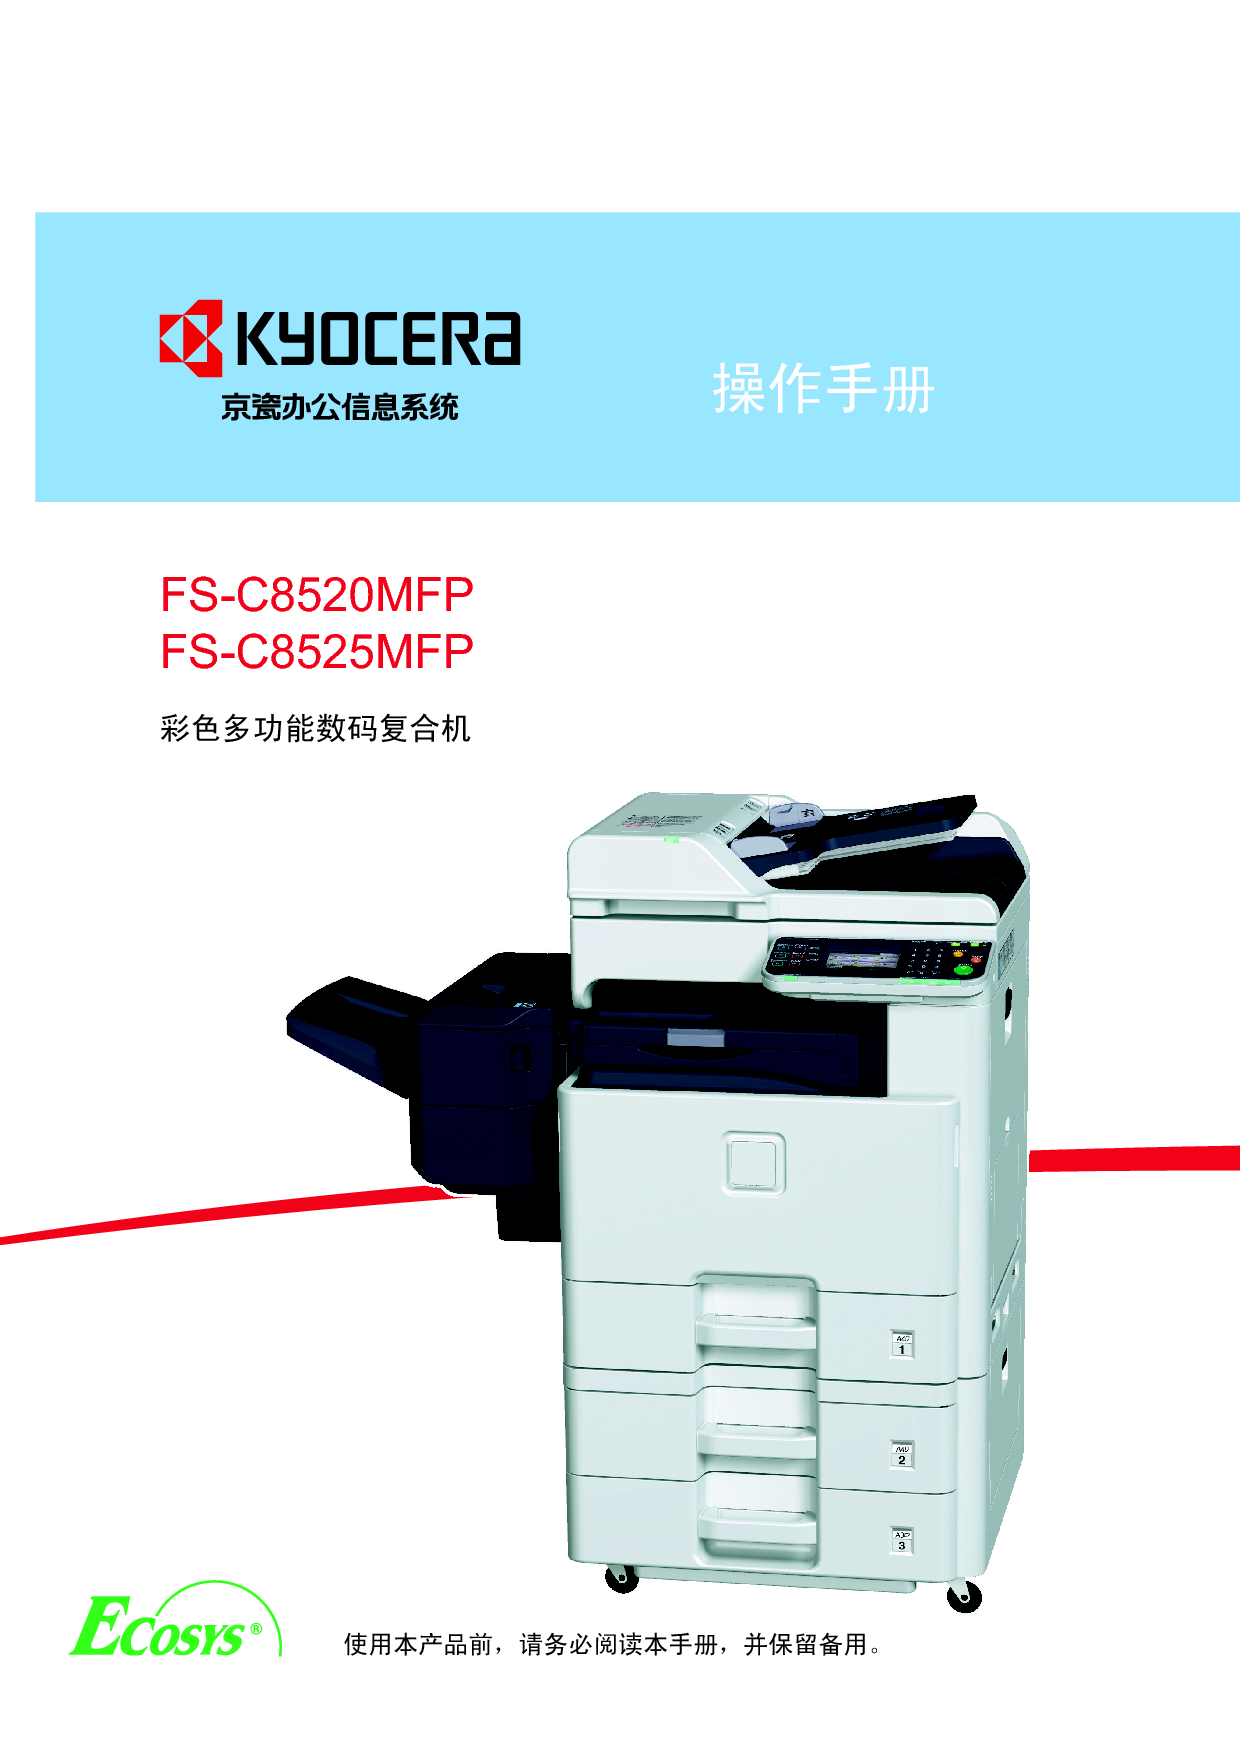 京瓷 Kyocera FS-C8520MFP 操作手册 封面